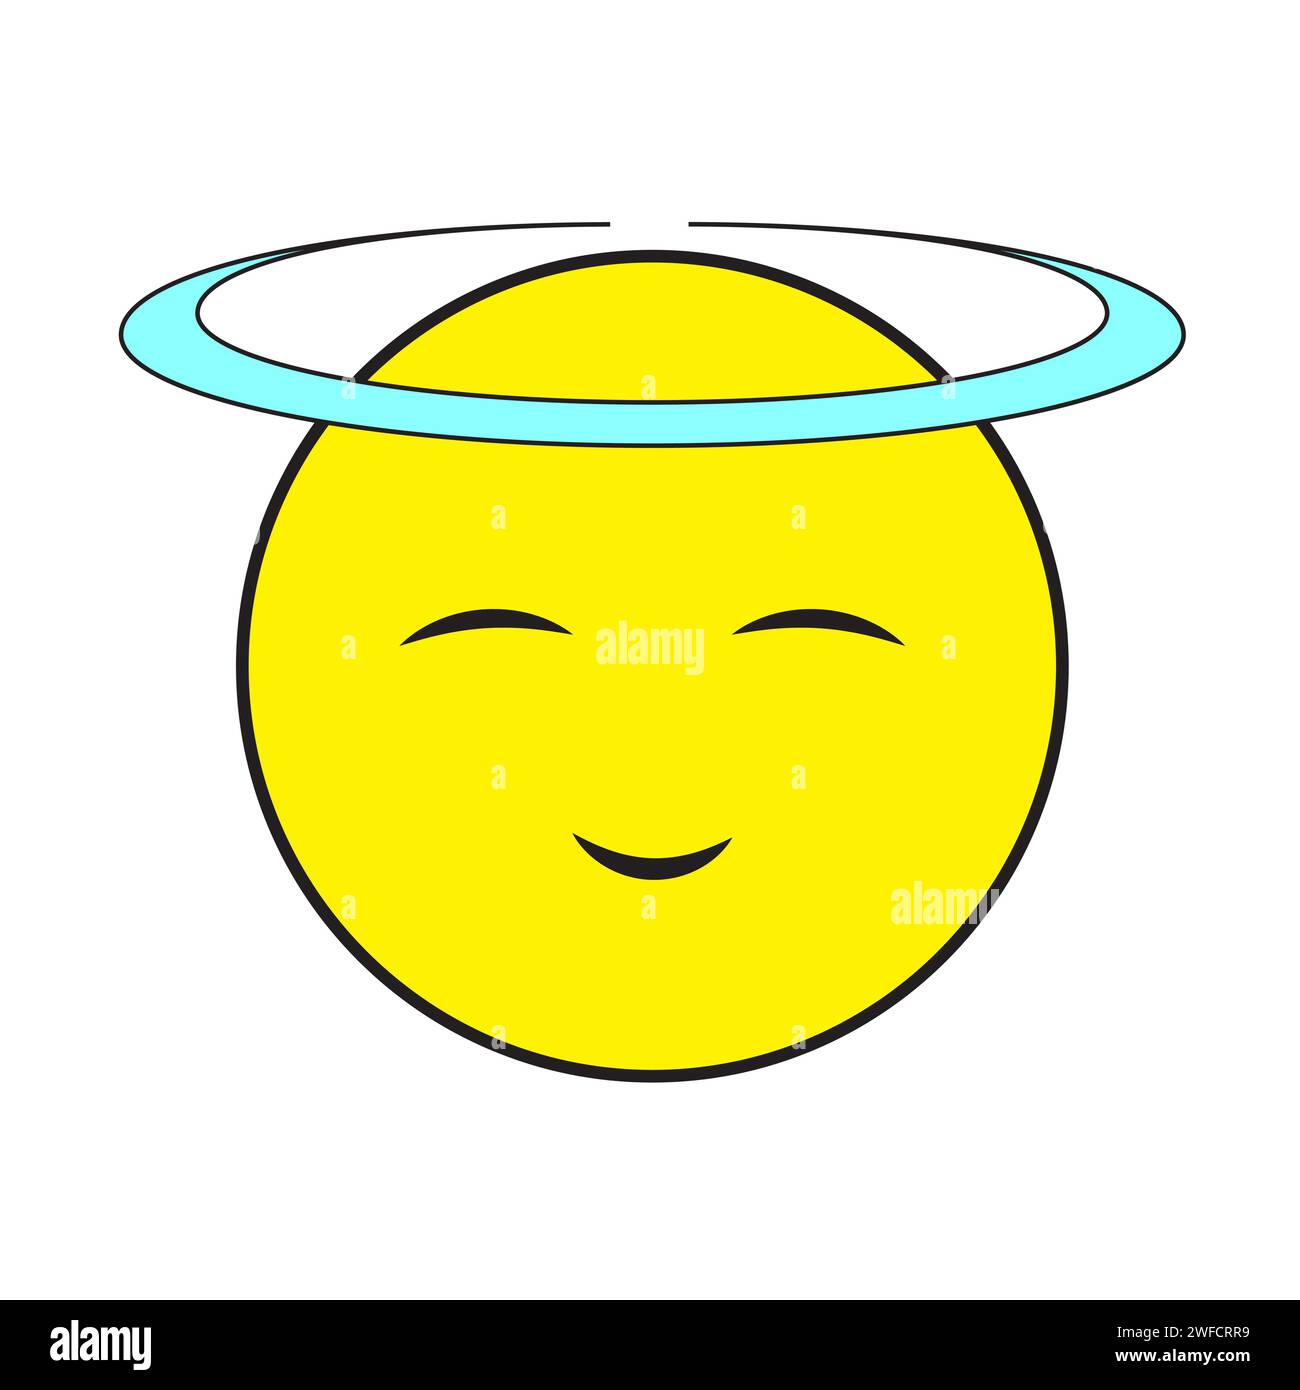 3d Halo Smiley. Smile Emoji Sign. Cute Cartoon Vector Design. Happy Face.  Vector Illustration. Stock Image Stock Vector - Illustration of head,  isolated: 243889679